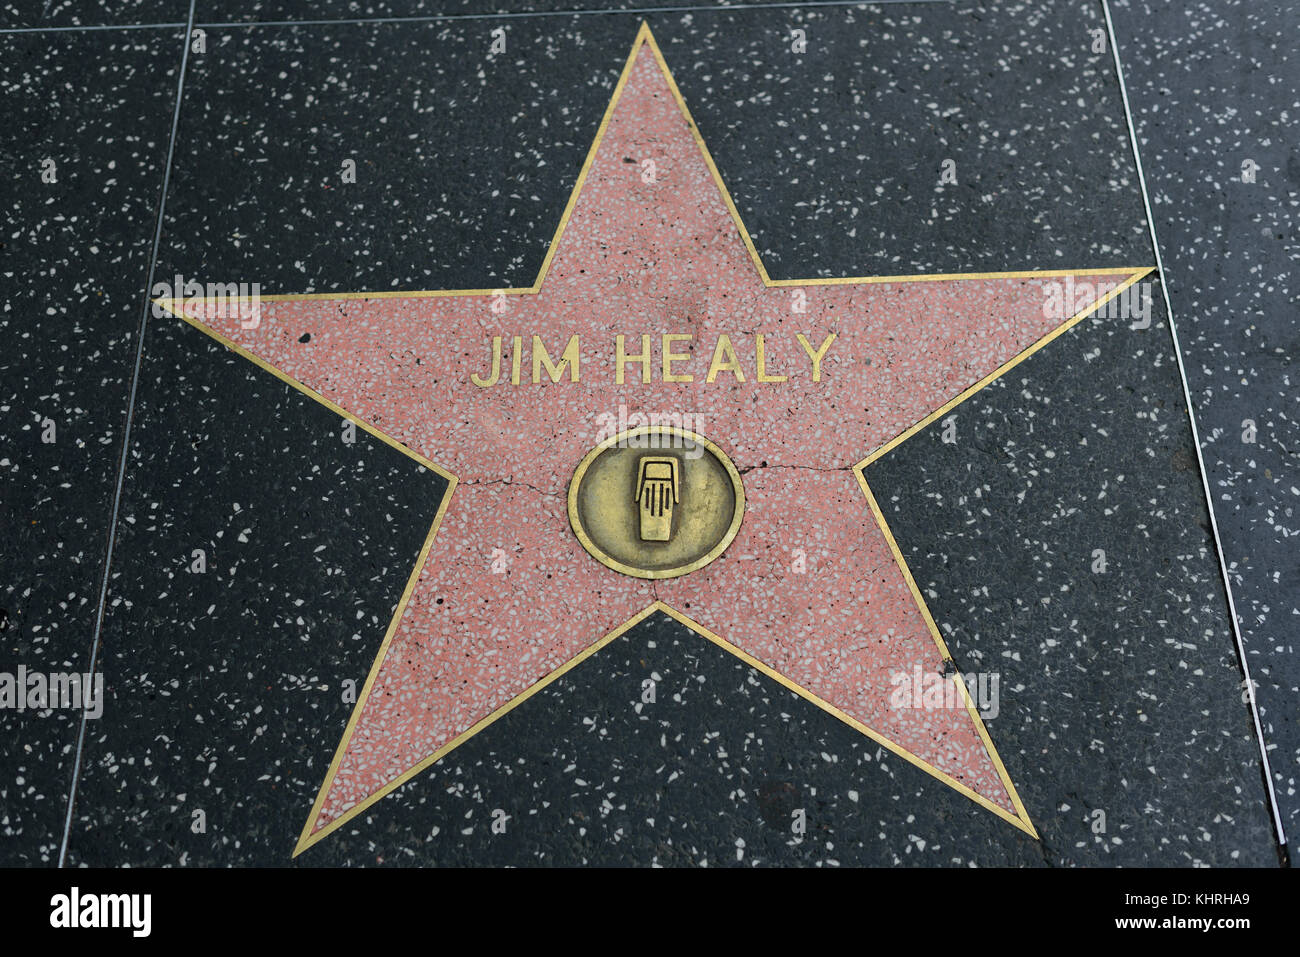 HOLLYWOOD, CA - DEZEMBER 06: Jim Healy Star auf dem Hollywood Walk of Fame in Hollywood, Kalifornien am 6. Dezember 2016. Stockfoto